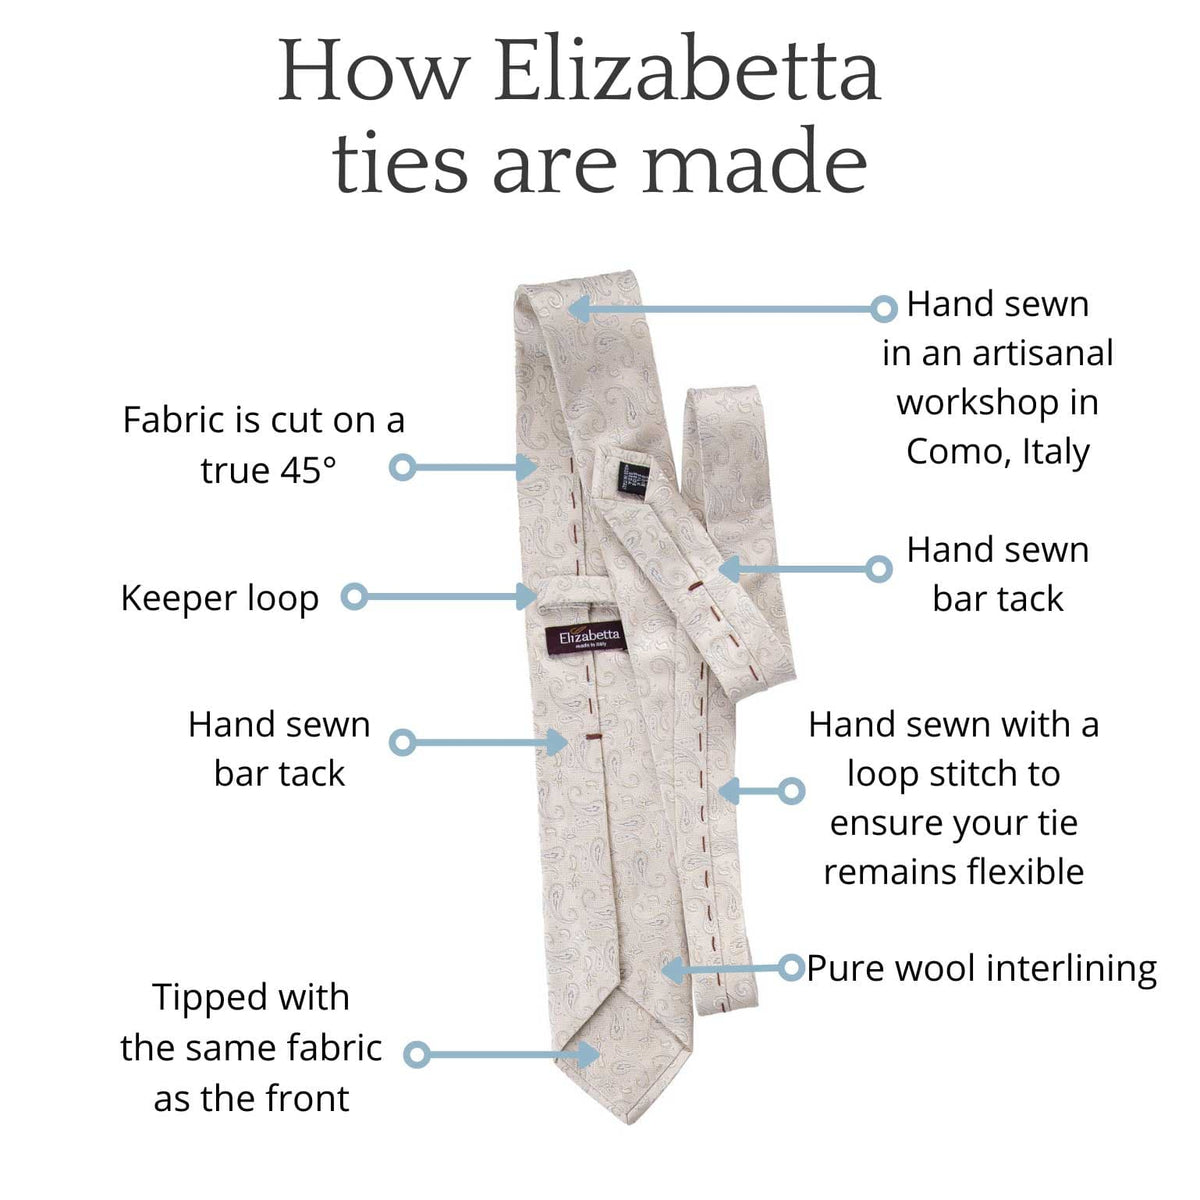 Hoe Elizabetta ties are made